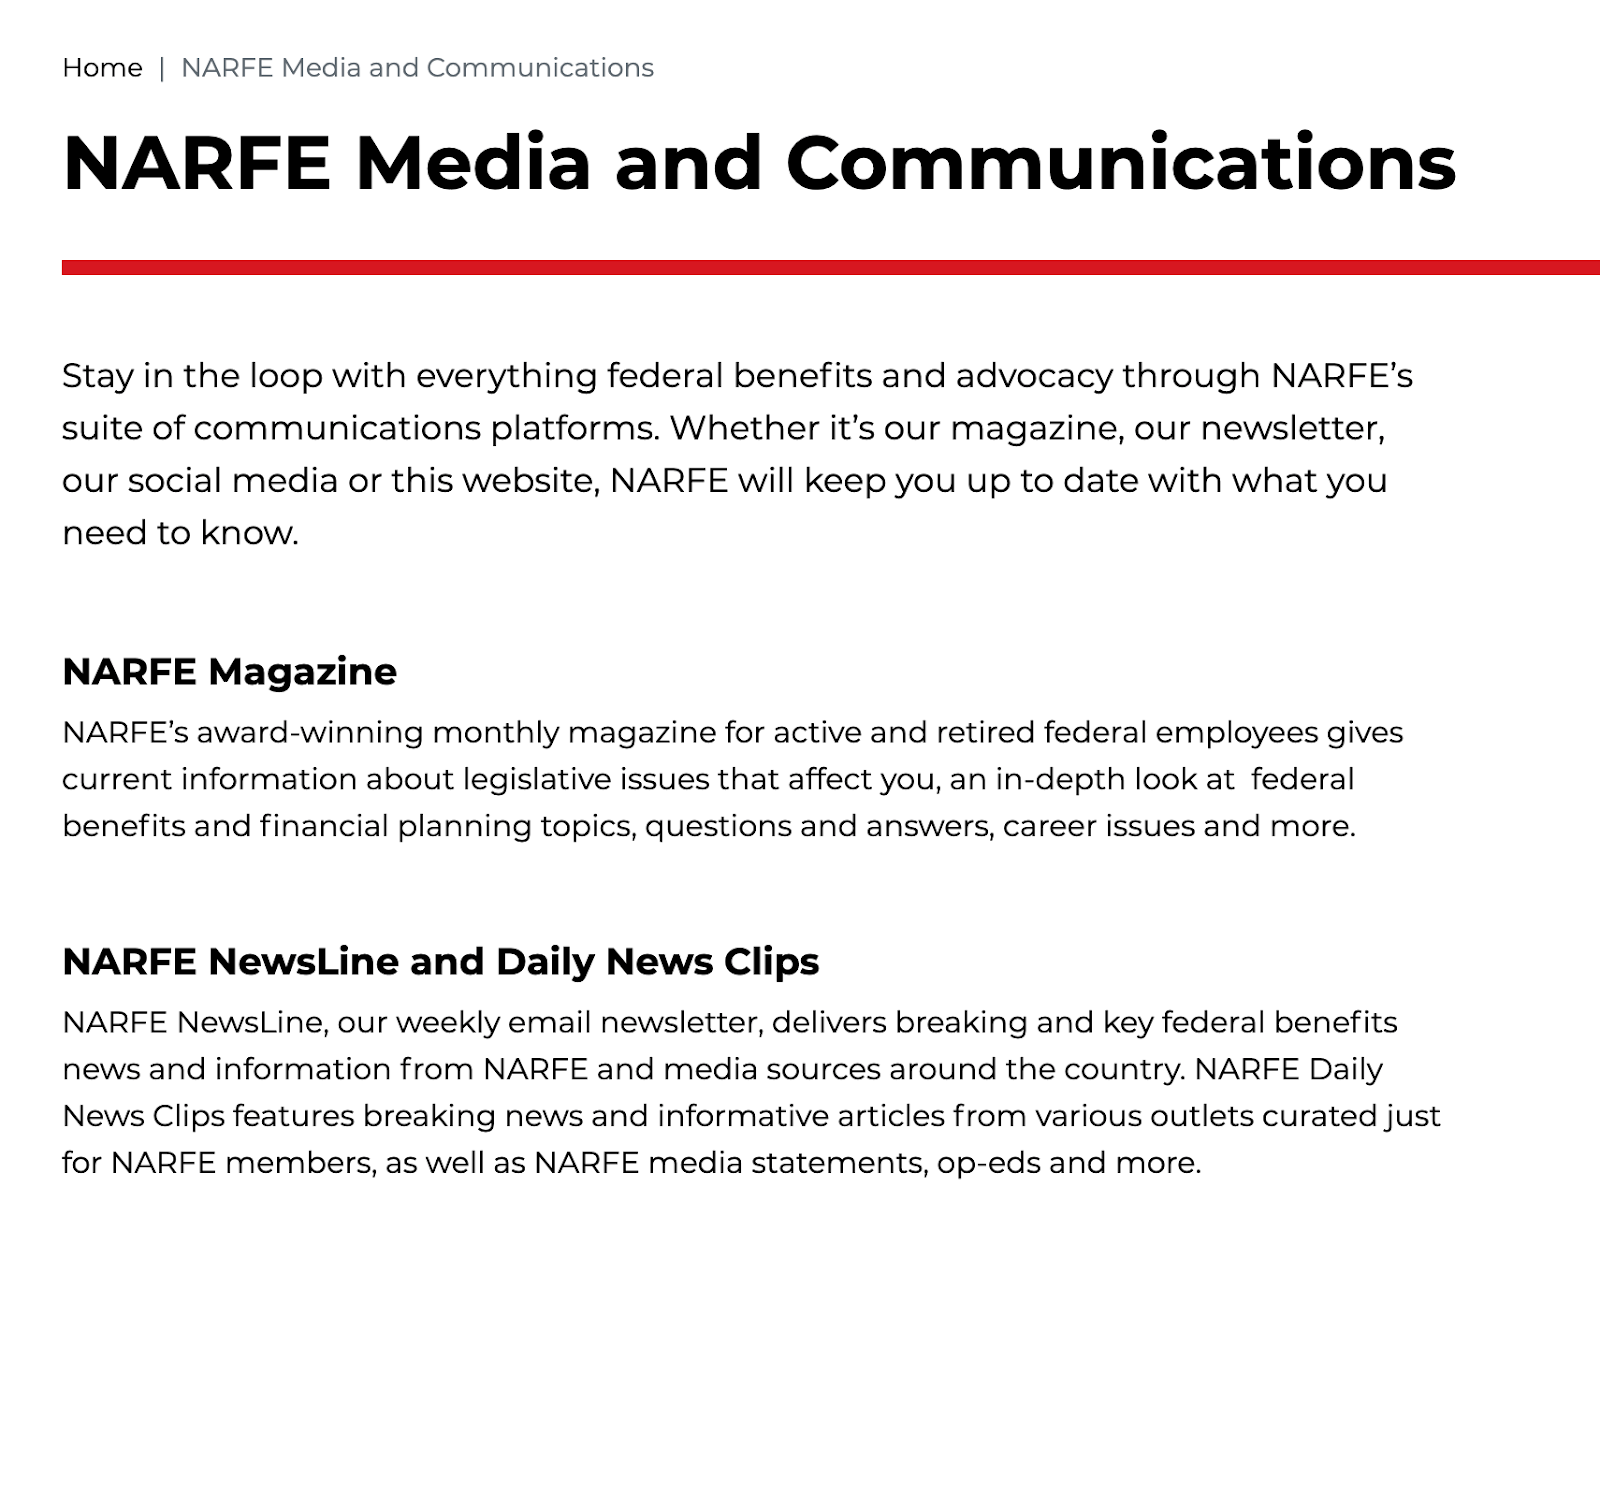 NARFE Media and Communications